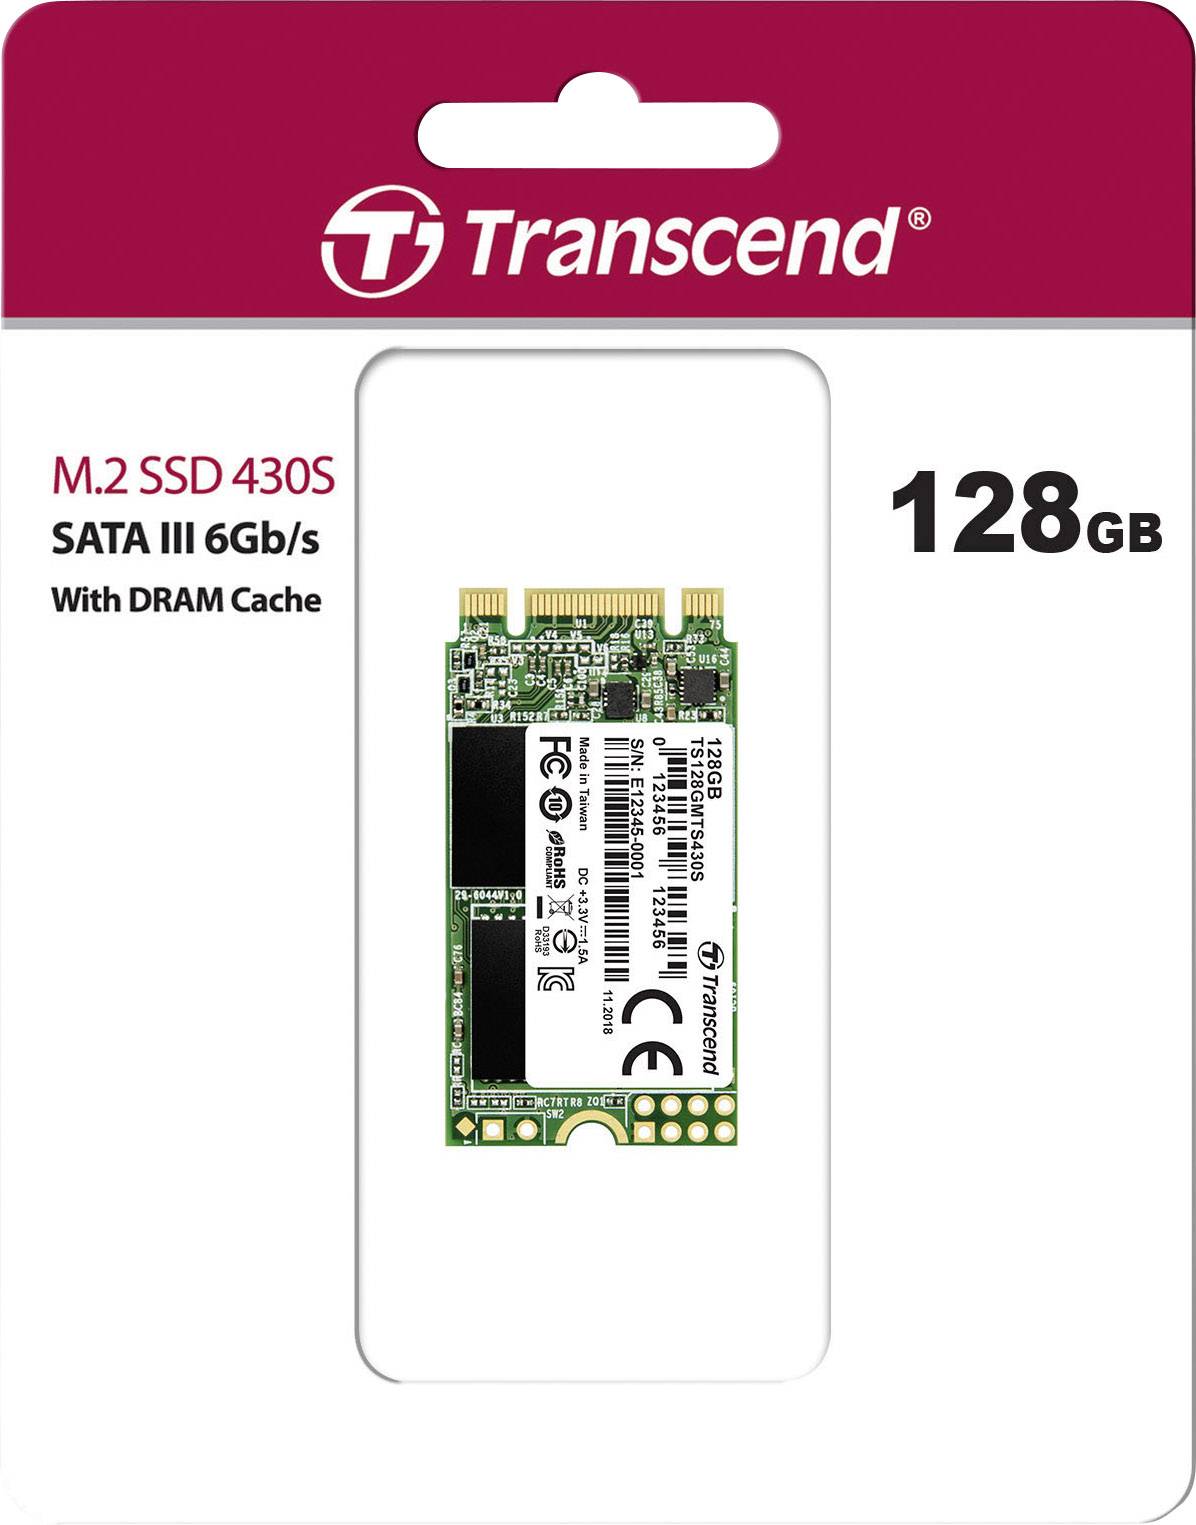 Transcend M.2 SSD 430S